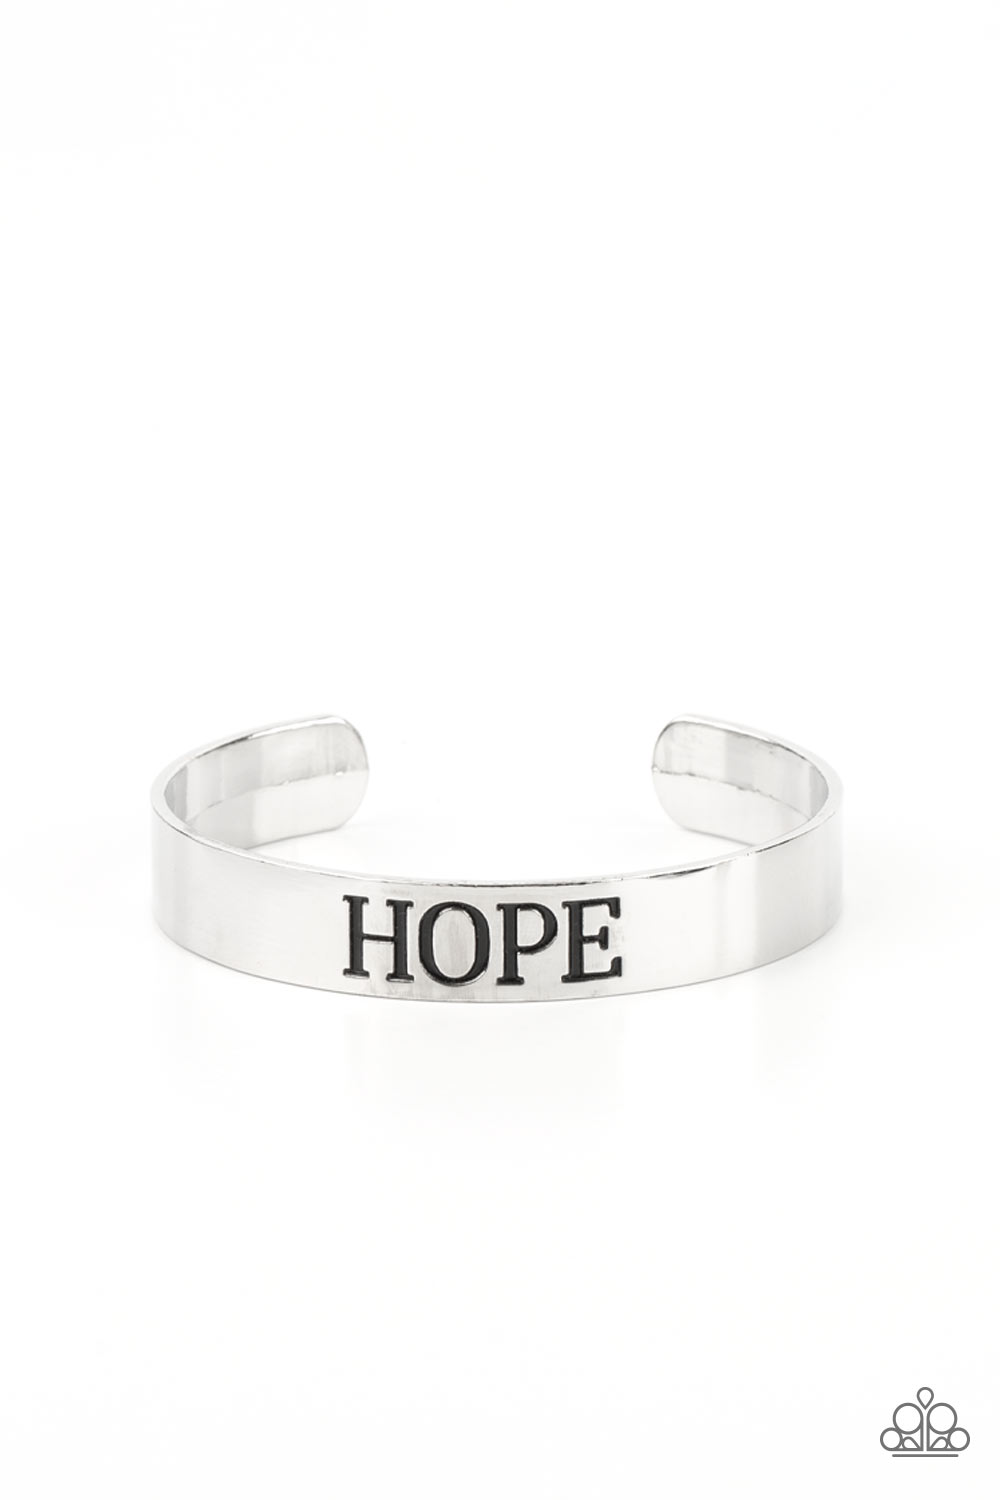 Hope Makes The World Go Round - Silver cuff bracelet B079